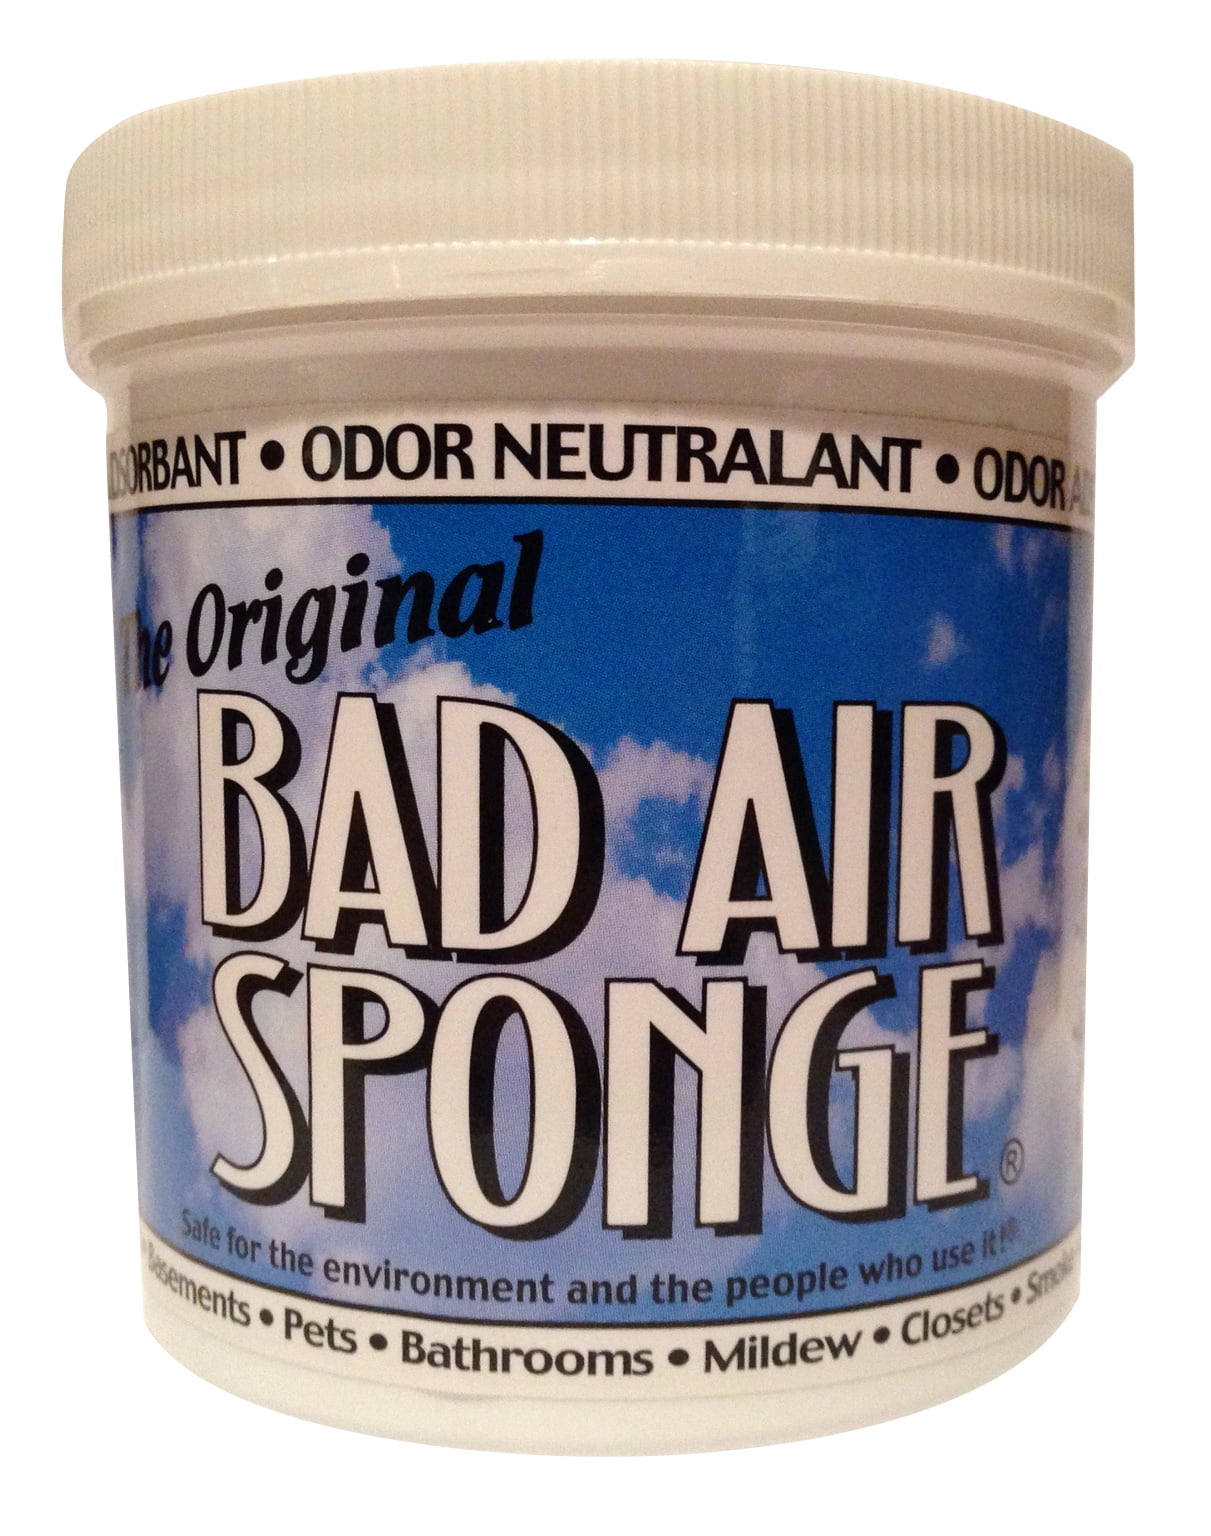 Bad air sponge 空氣淨化劑除甲醛去味清新空氣– Moremallda